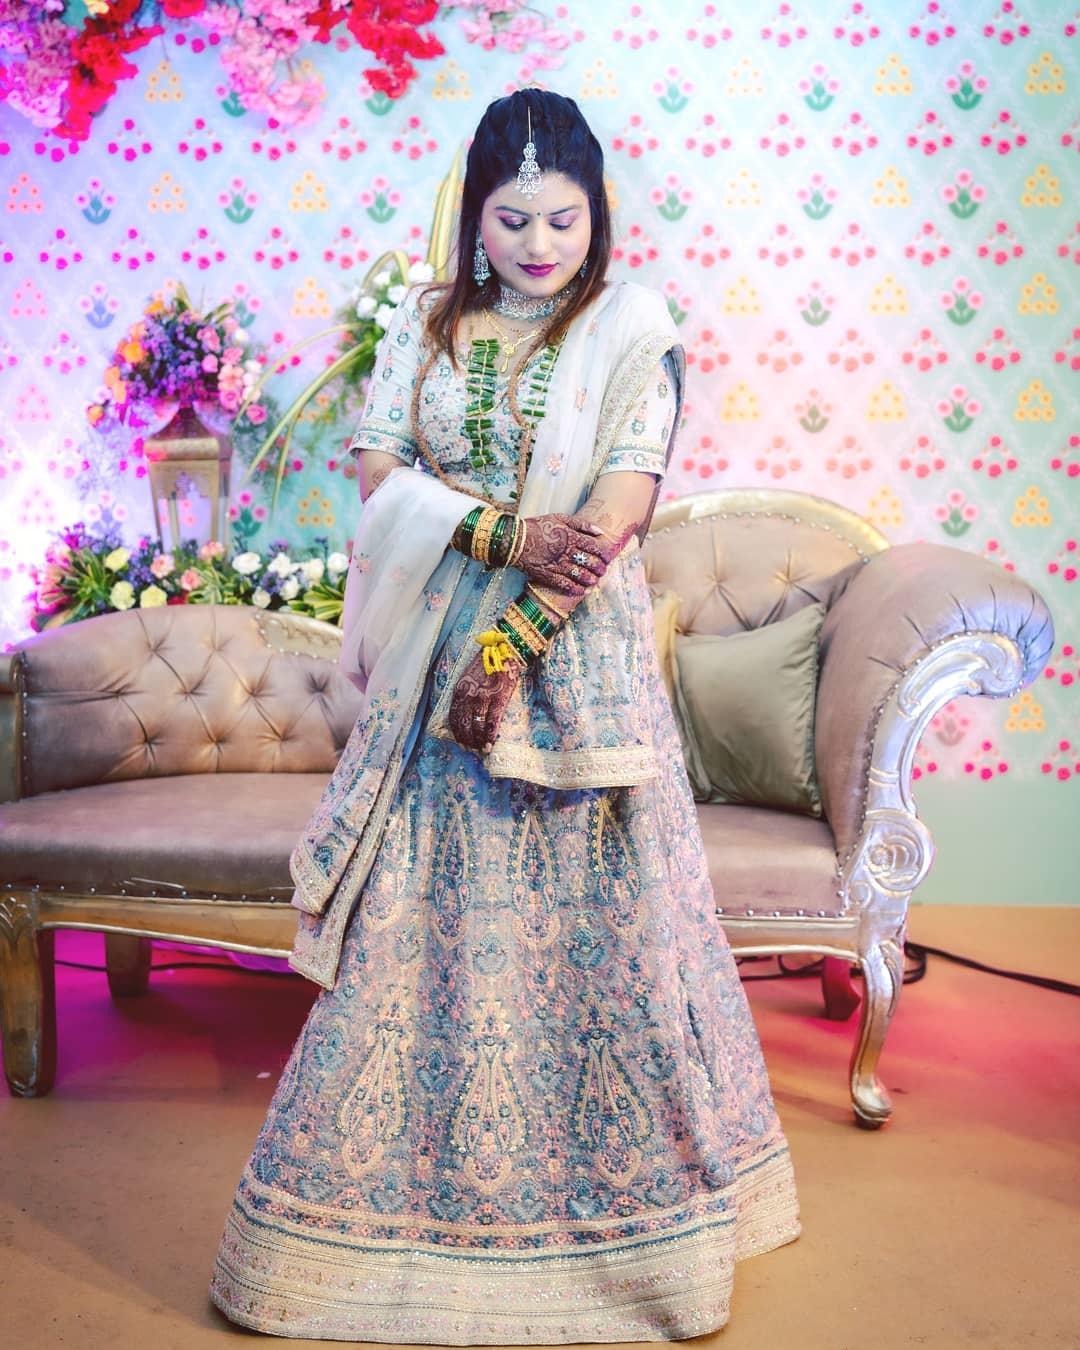 Juzer  Wedding Photographer, Pune